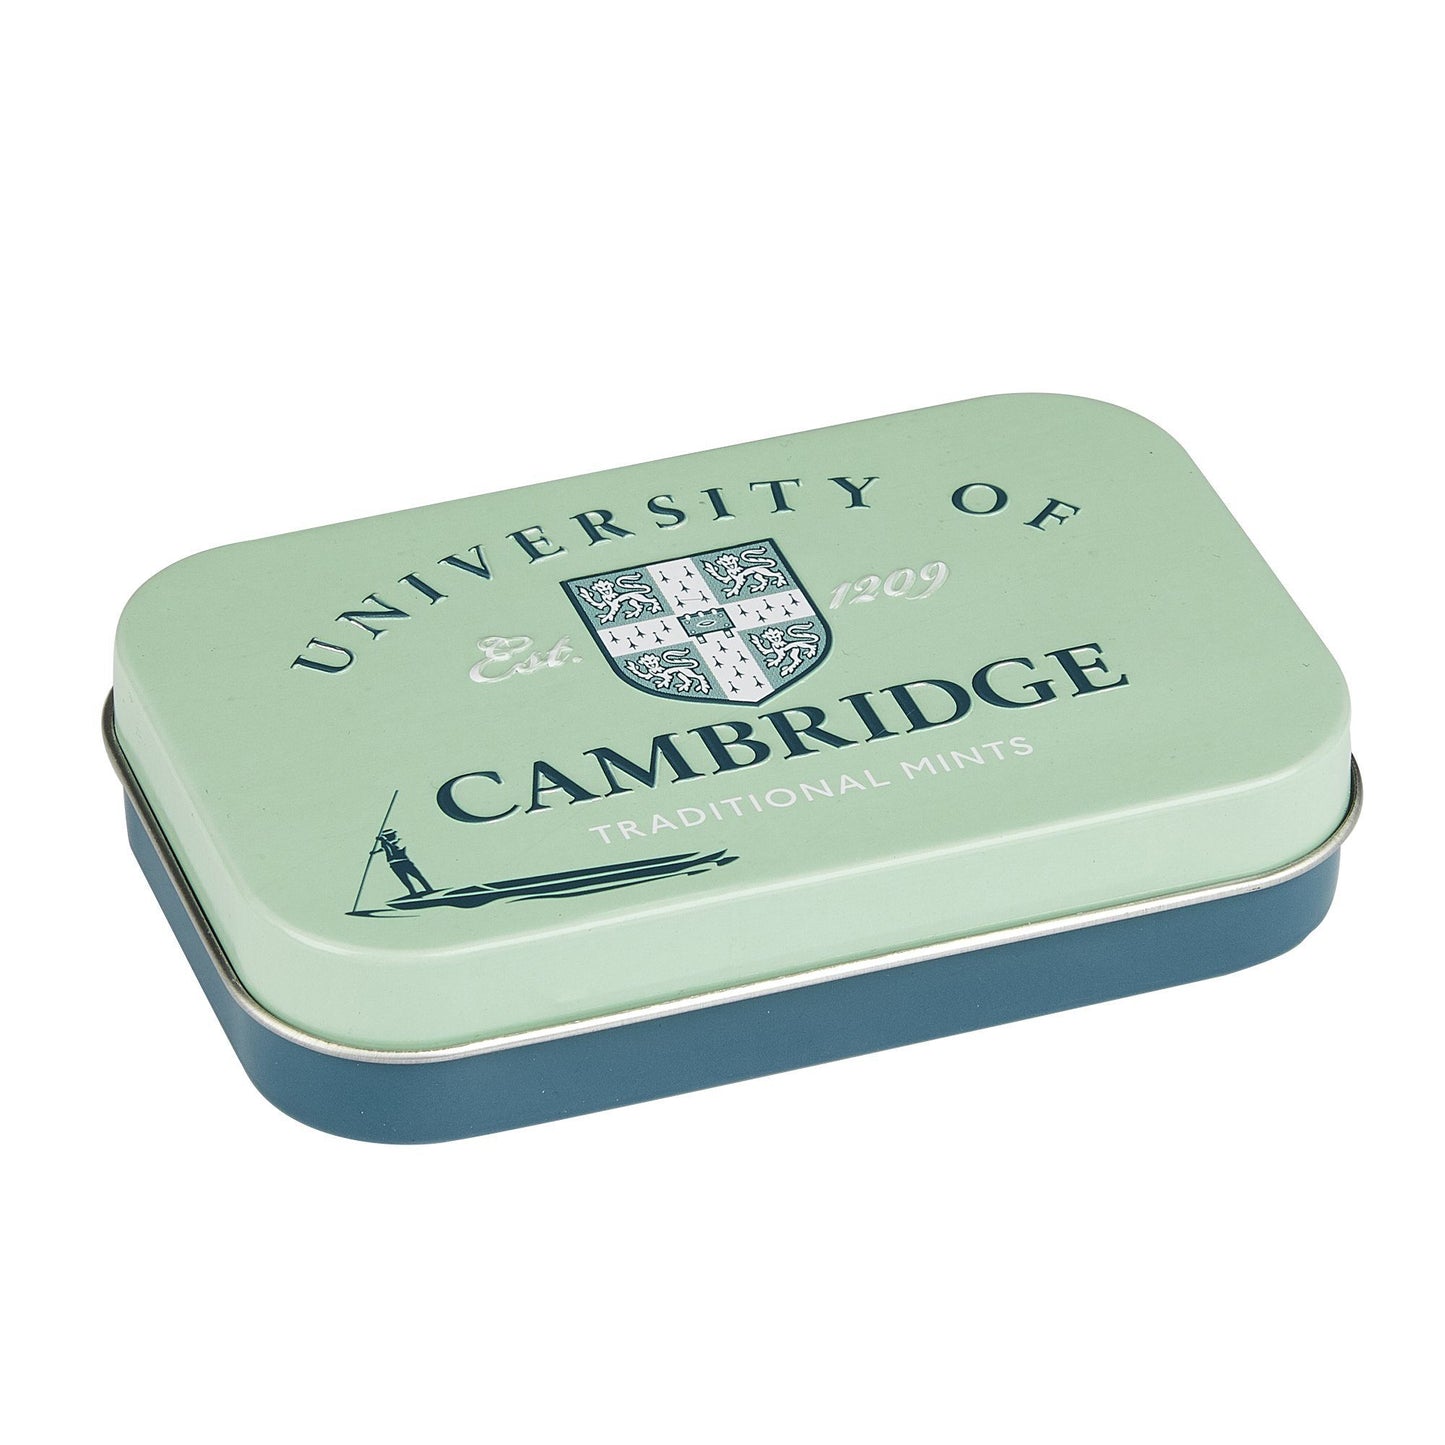 University of Cambridge Sugar Free Mints Pocket Tin 35g Mints New English Teas 